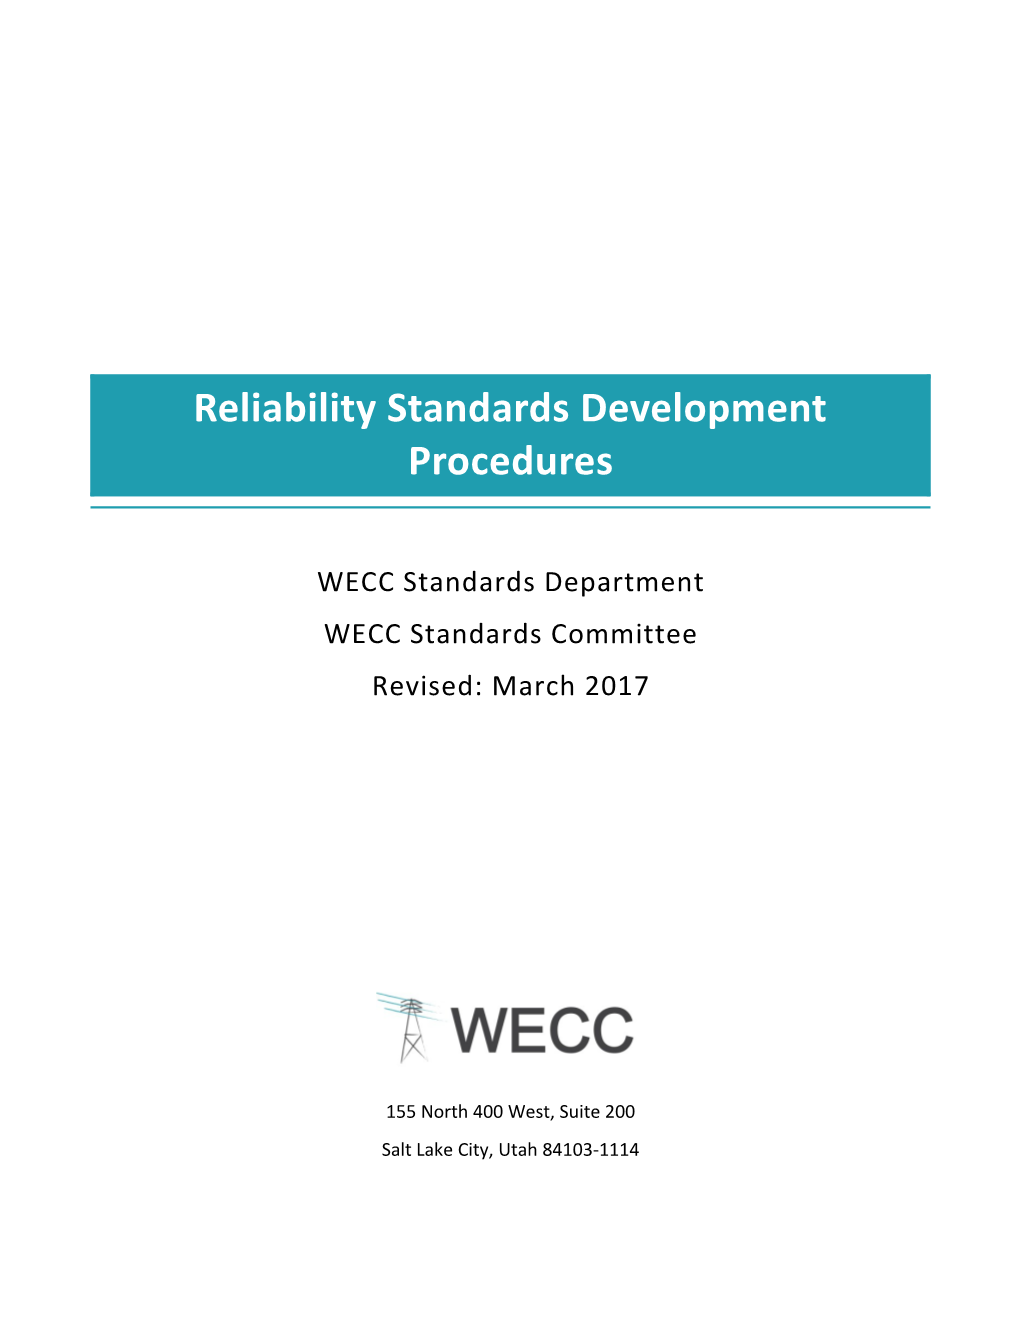 WECC-0117 Proposed Reliability Standards Development Procedures - March 2017